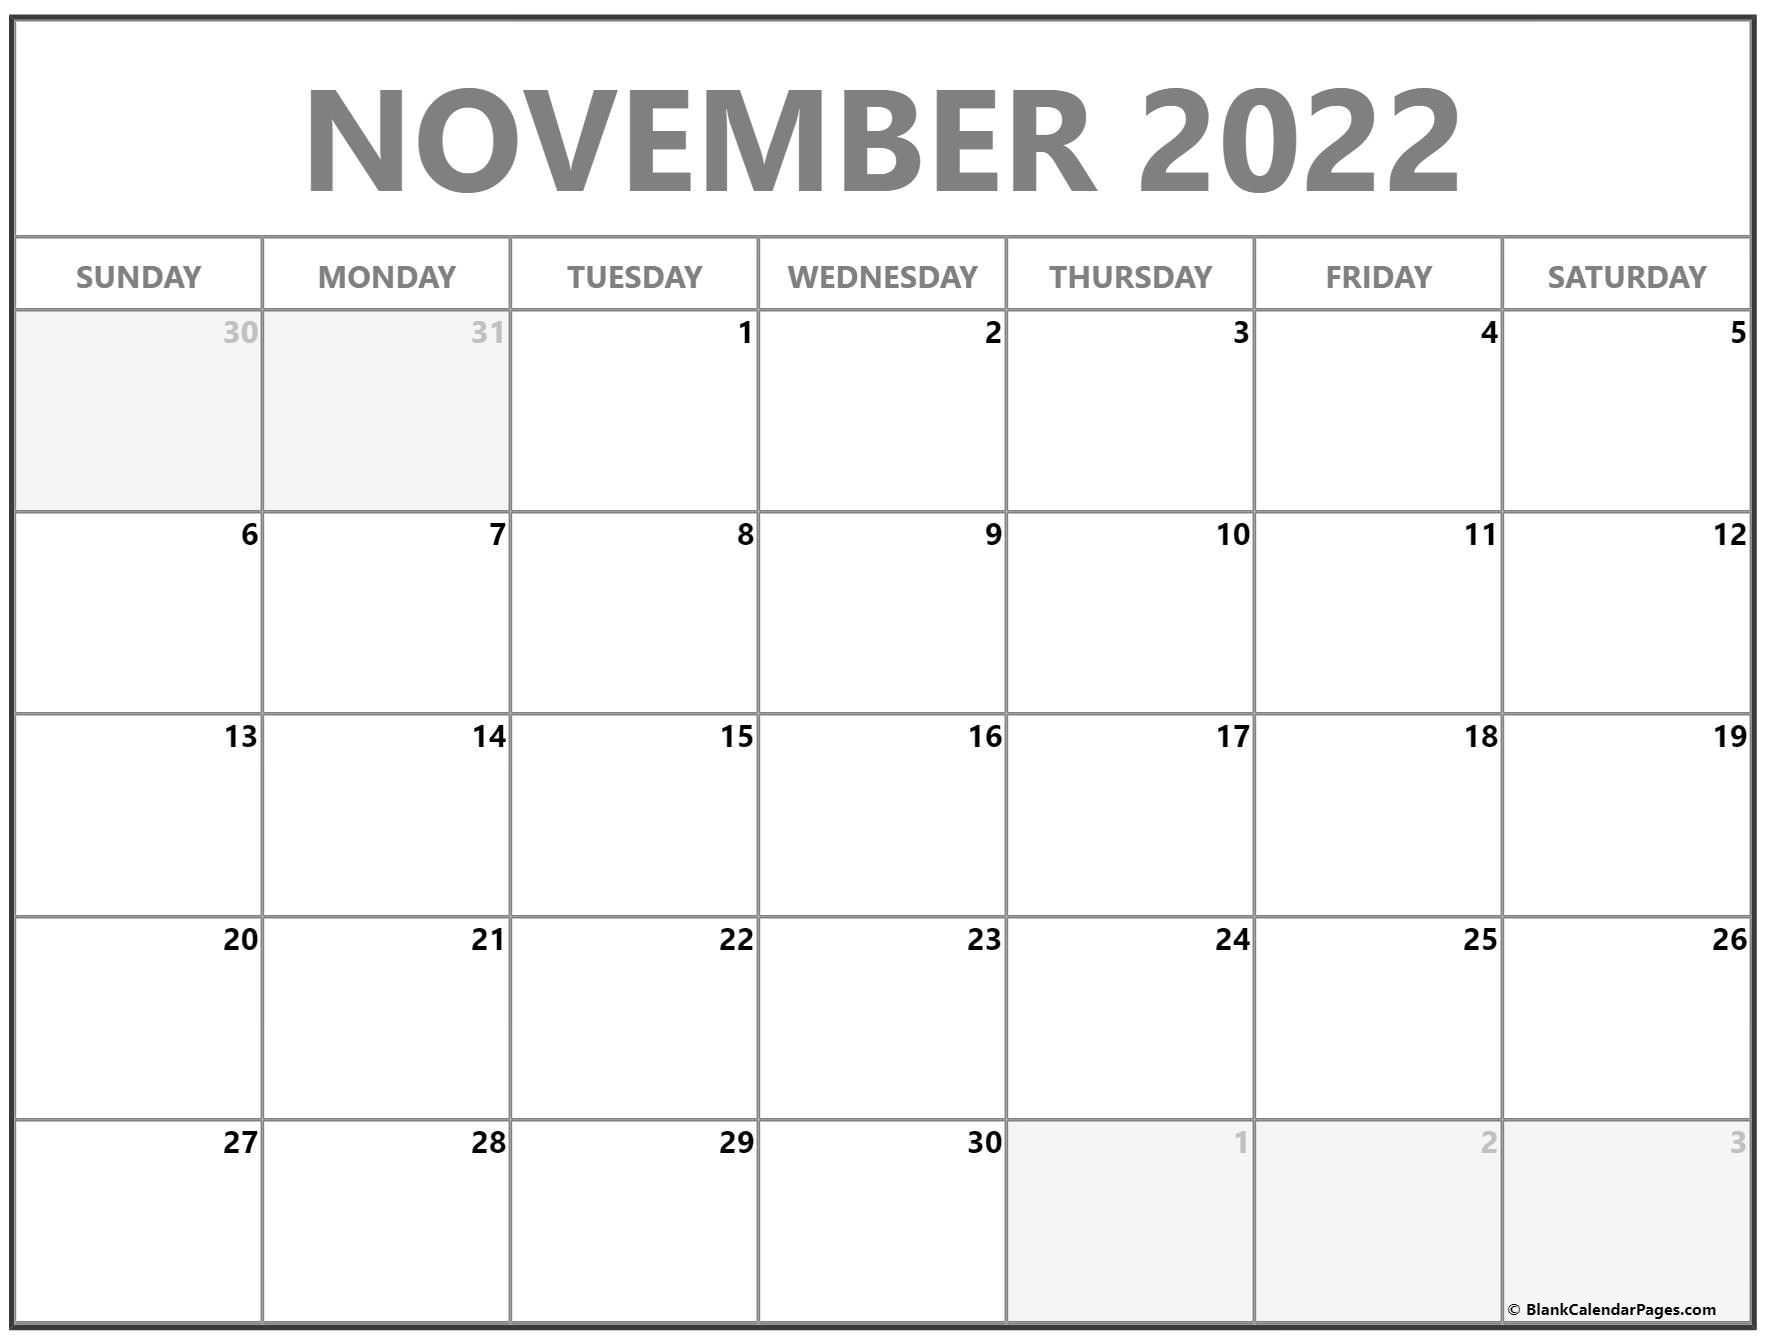 November 2022 Calendar | Free Printable Calendar Templates  November To January 2022 Calendar